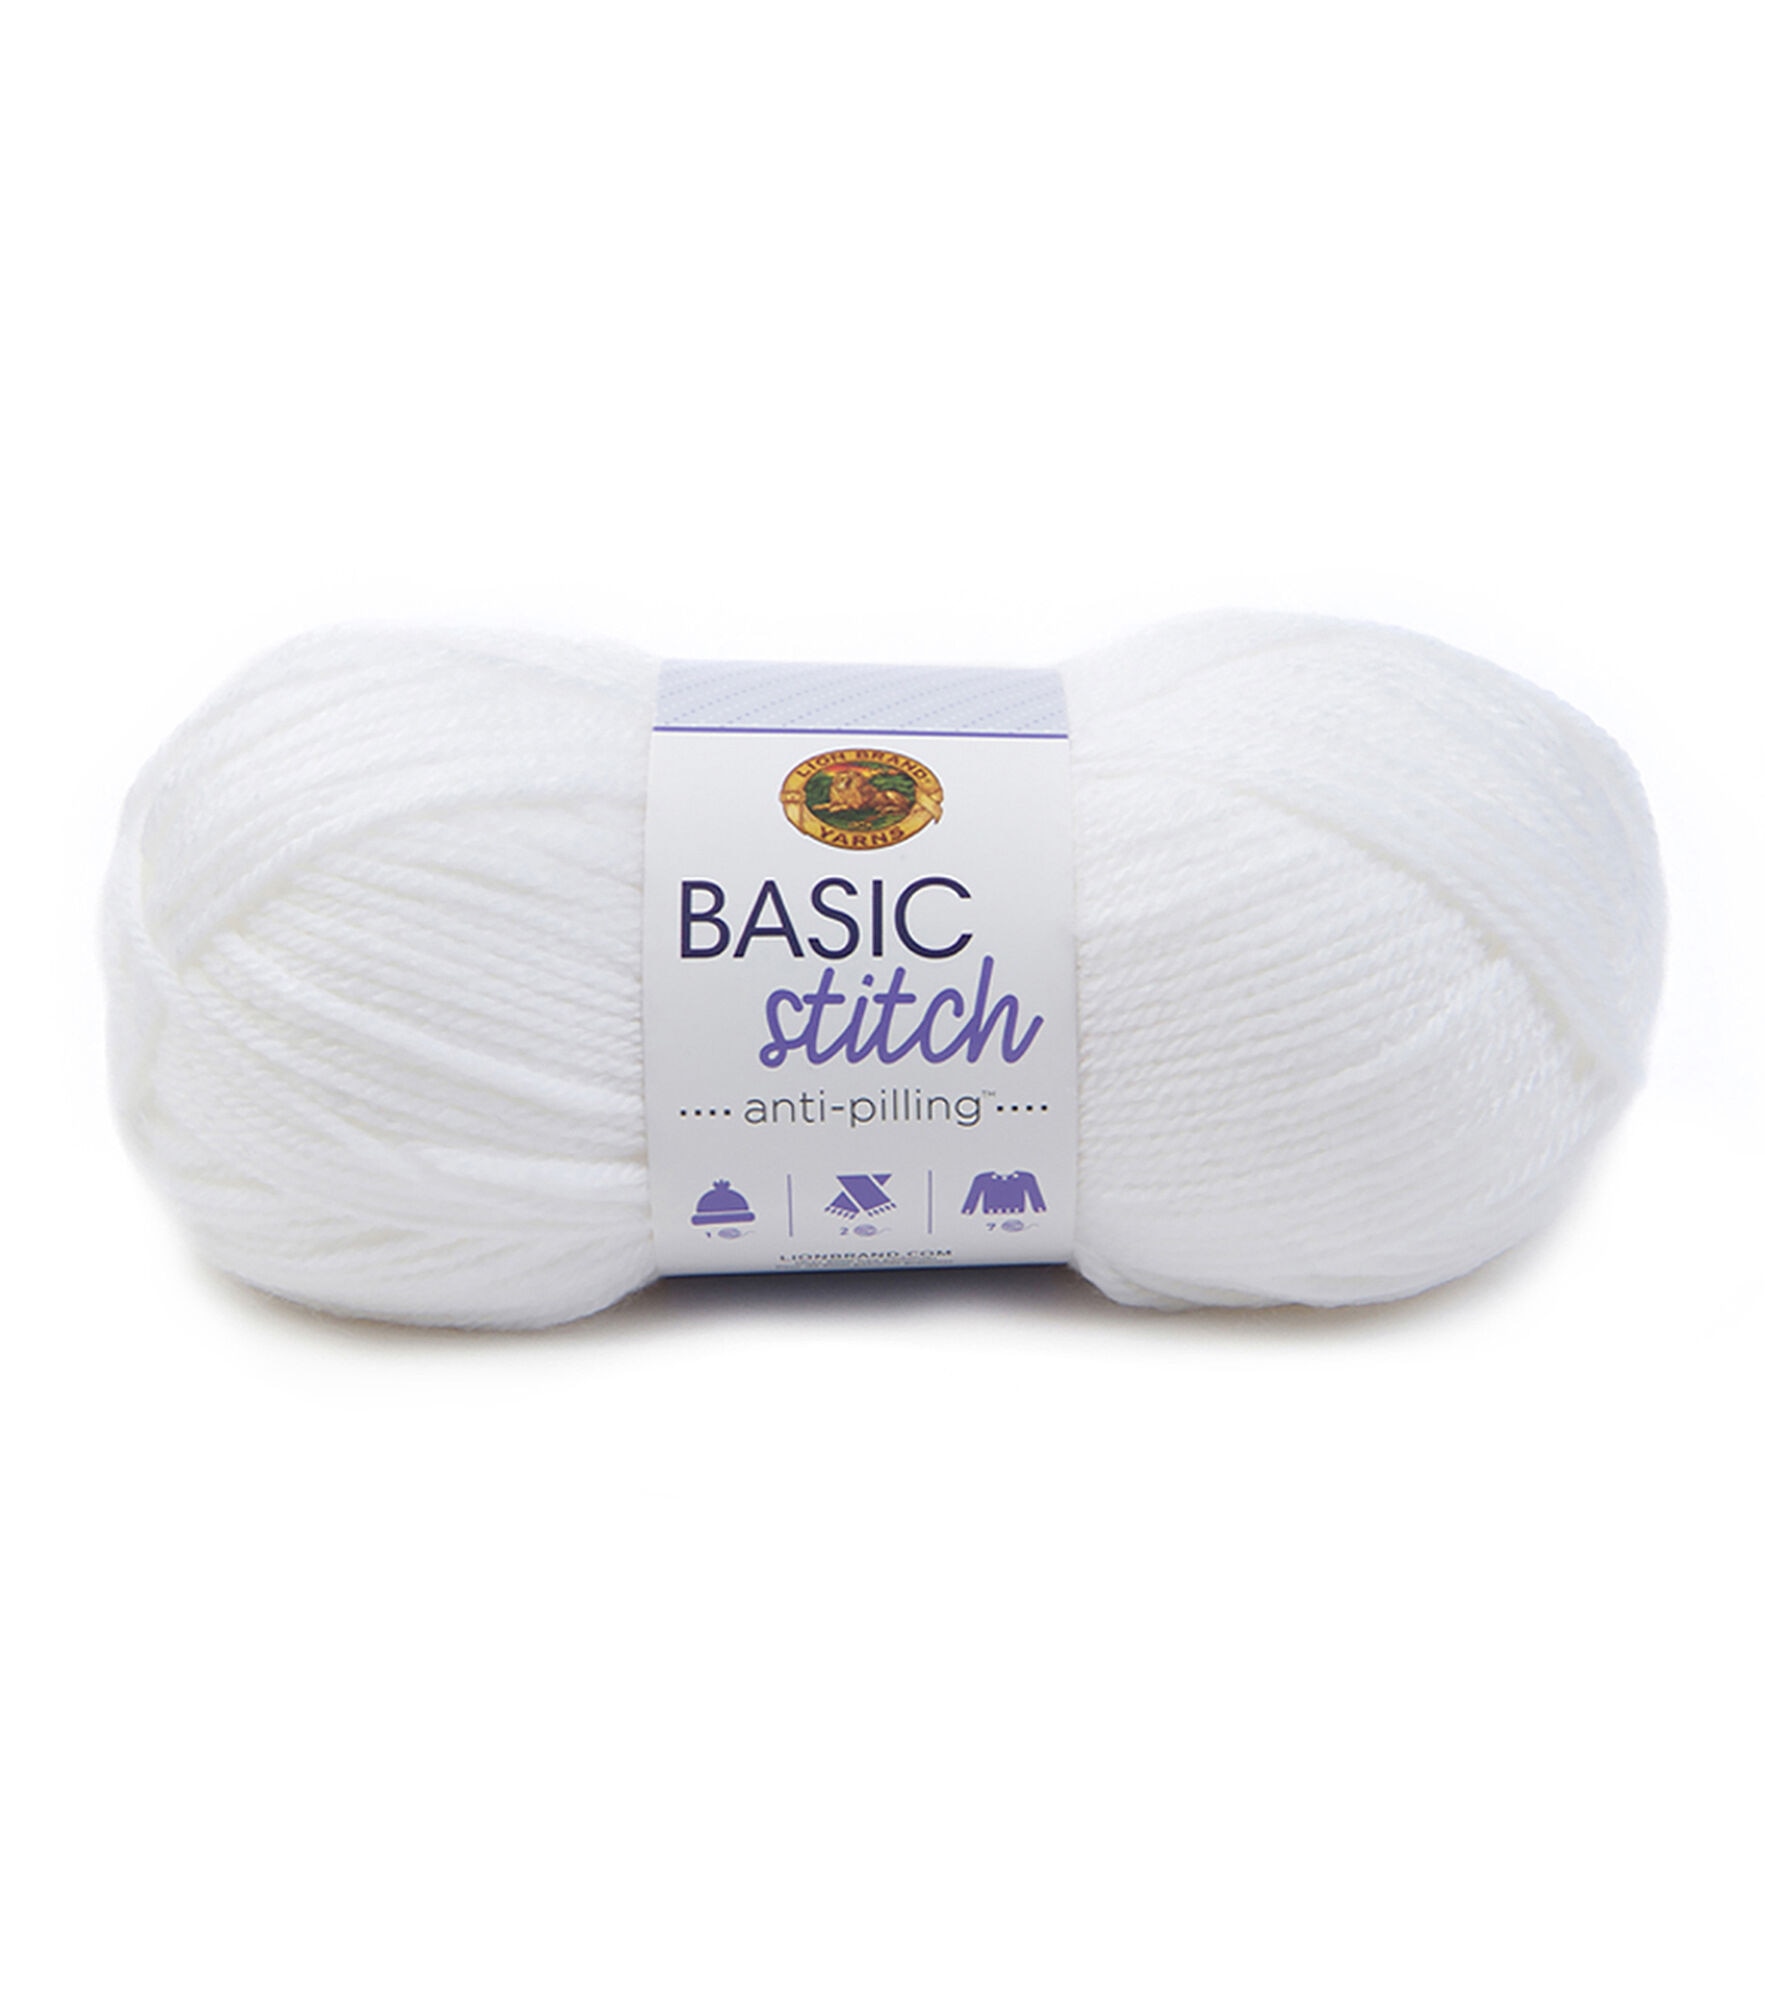 Lion Brand Basic Stitch Anti-Pilling Yarn-Olive, 1 count - Ralphs